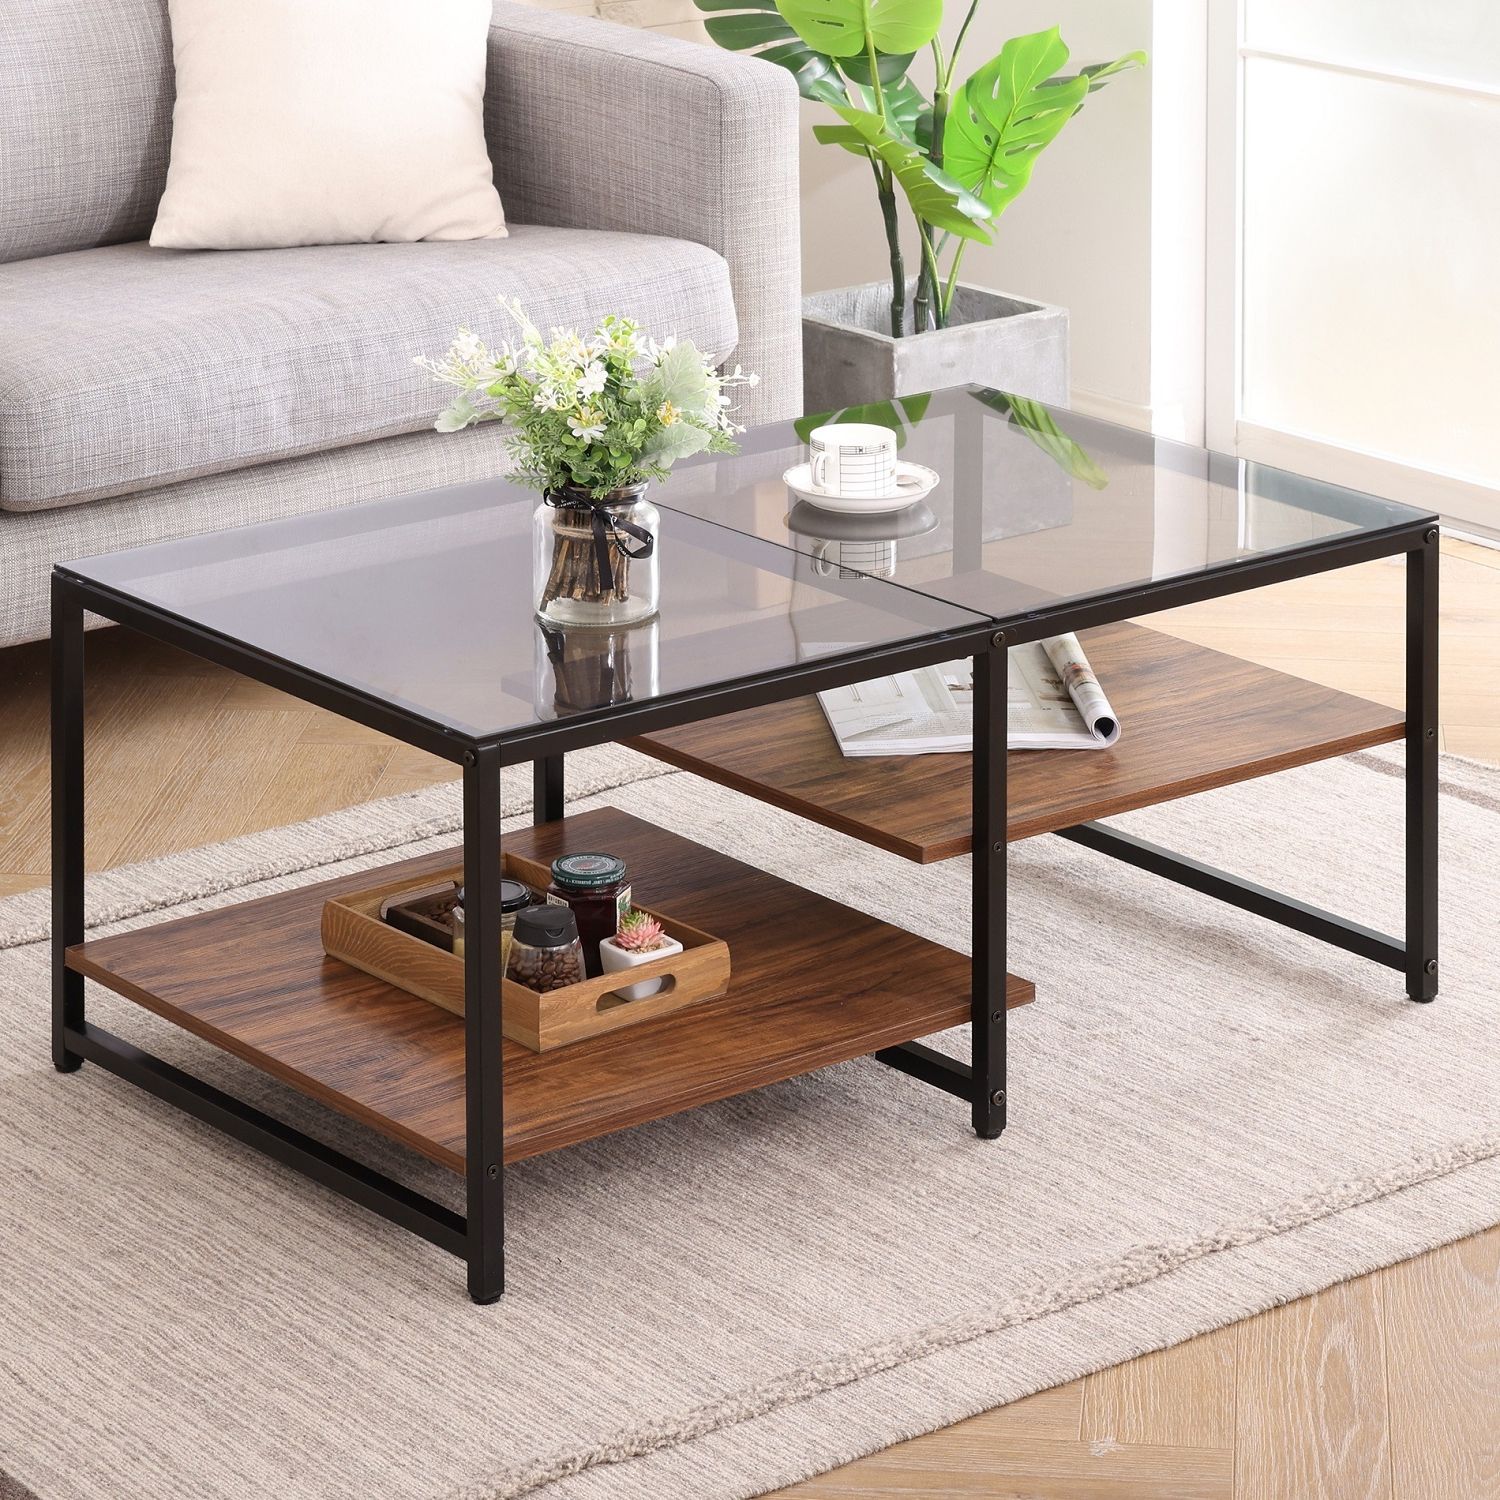 Homooi Glass Coffee Tables With Storage Shelves For Living Room, Retangle,   (View 6 of 20)